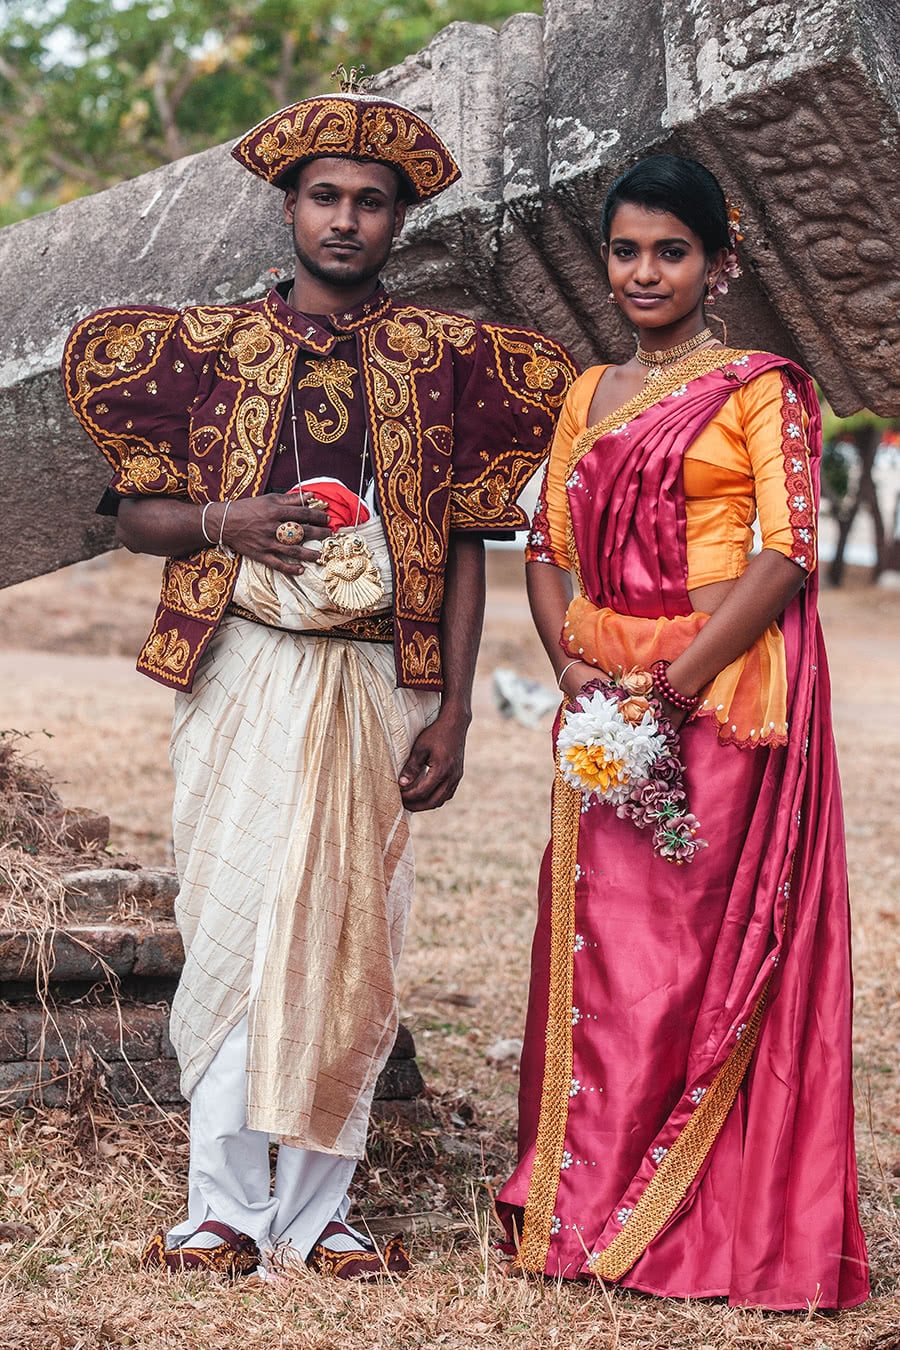 Wedding party taking photos at the ruins of Anuradhapura, Sri Lanka.